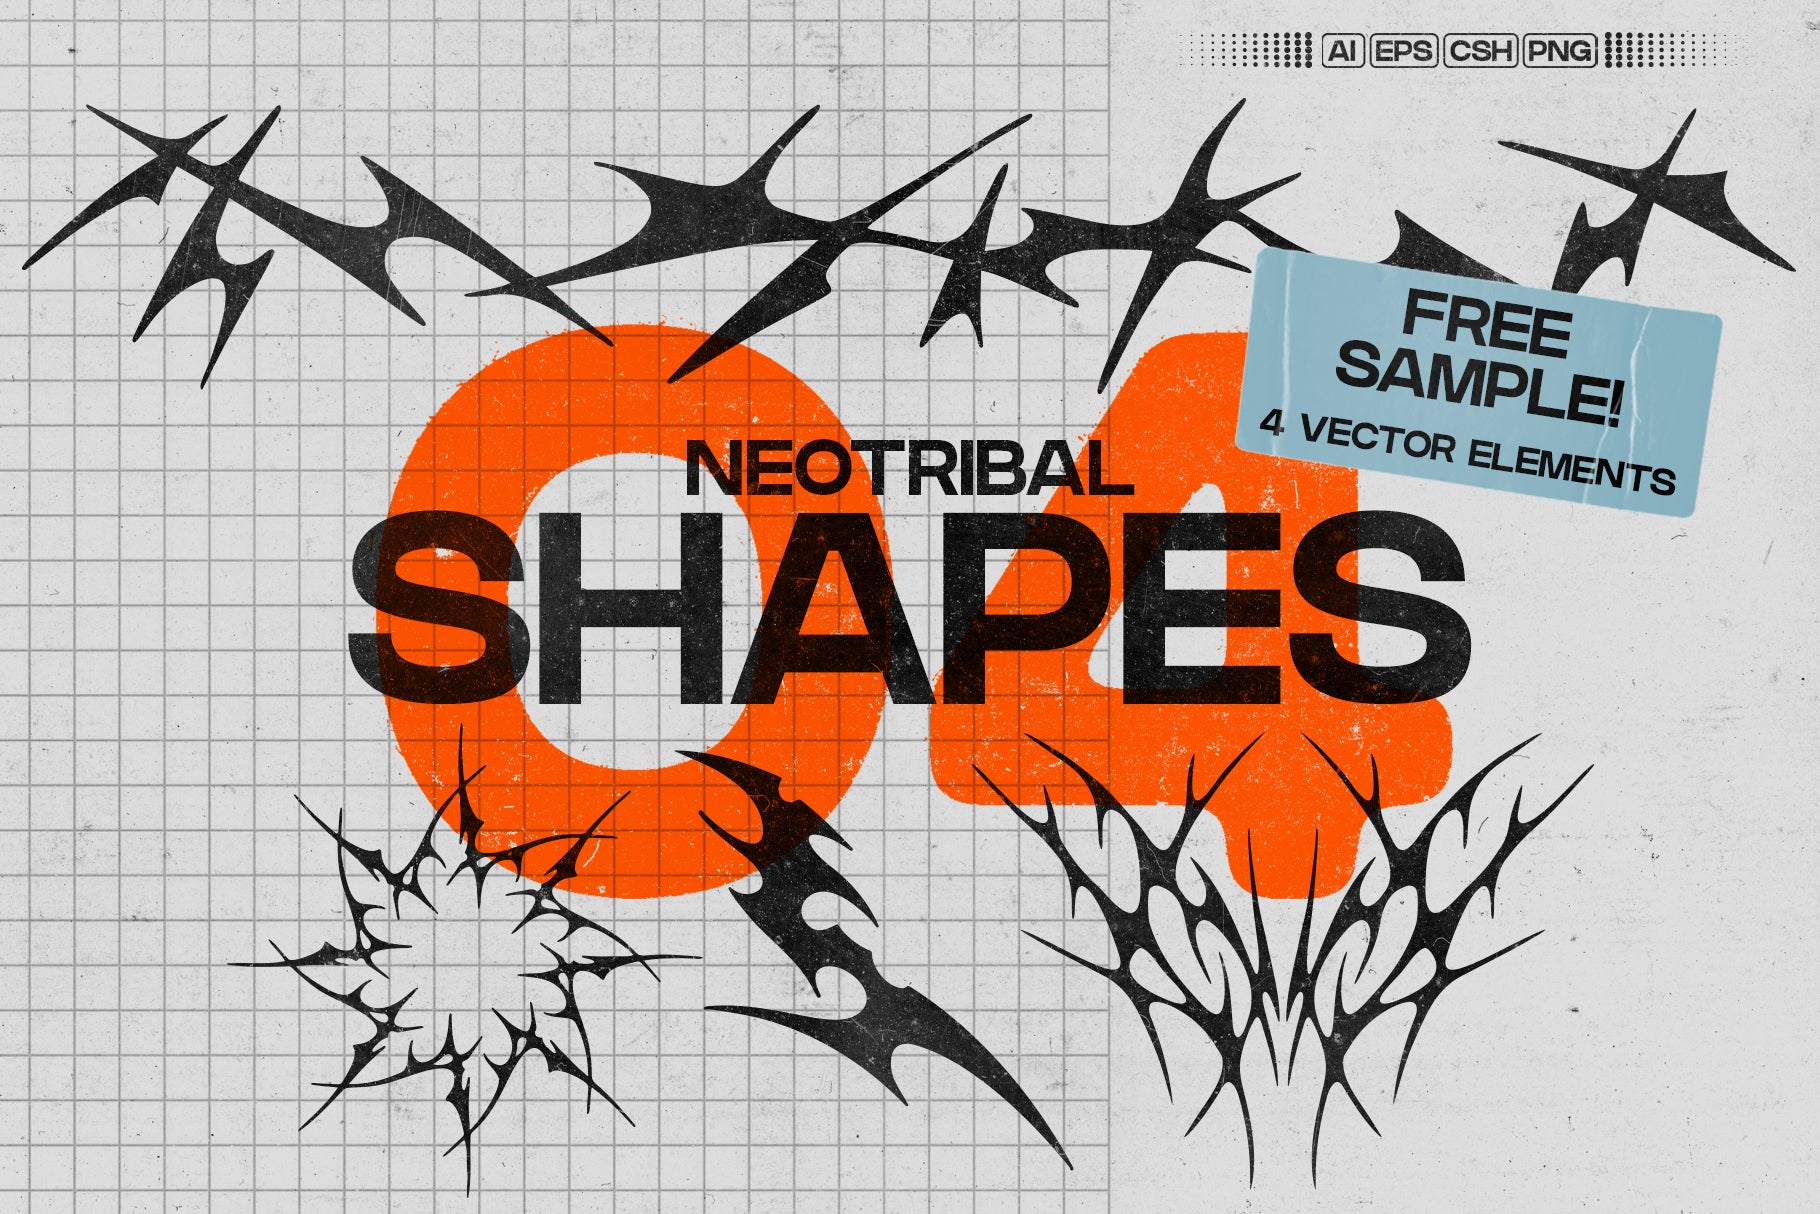 Neotribal Shapes - FREE SAMPLE